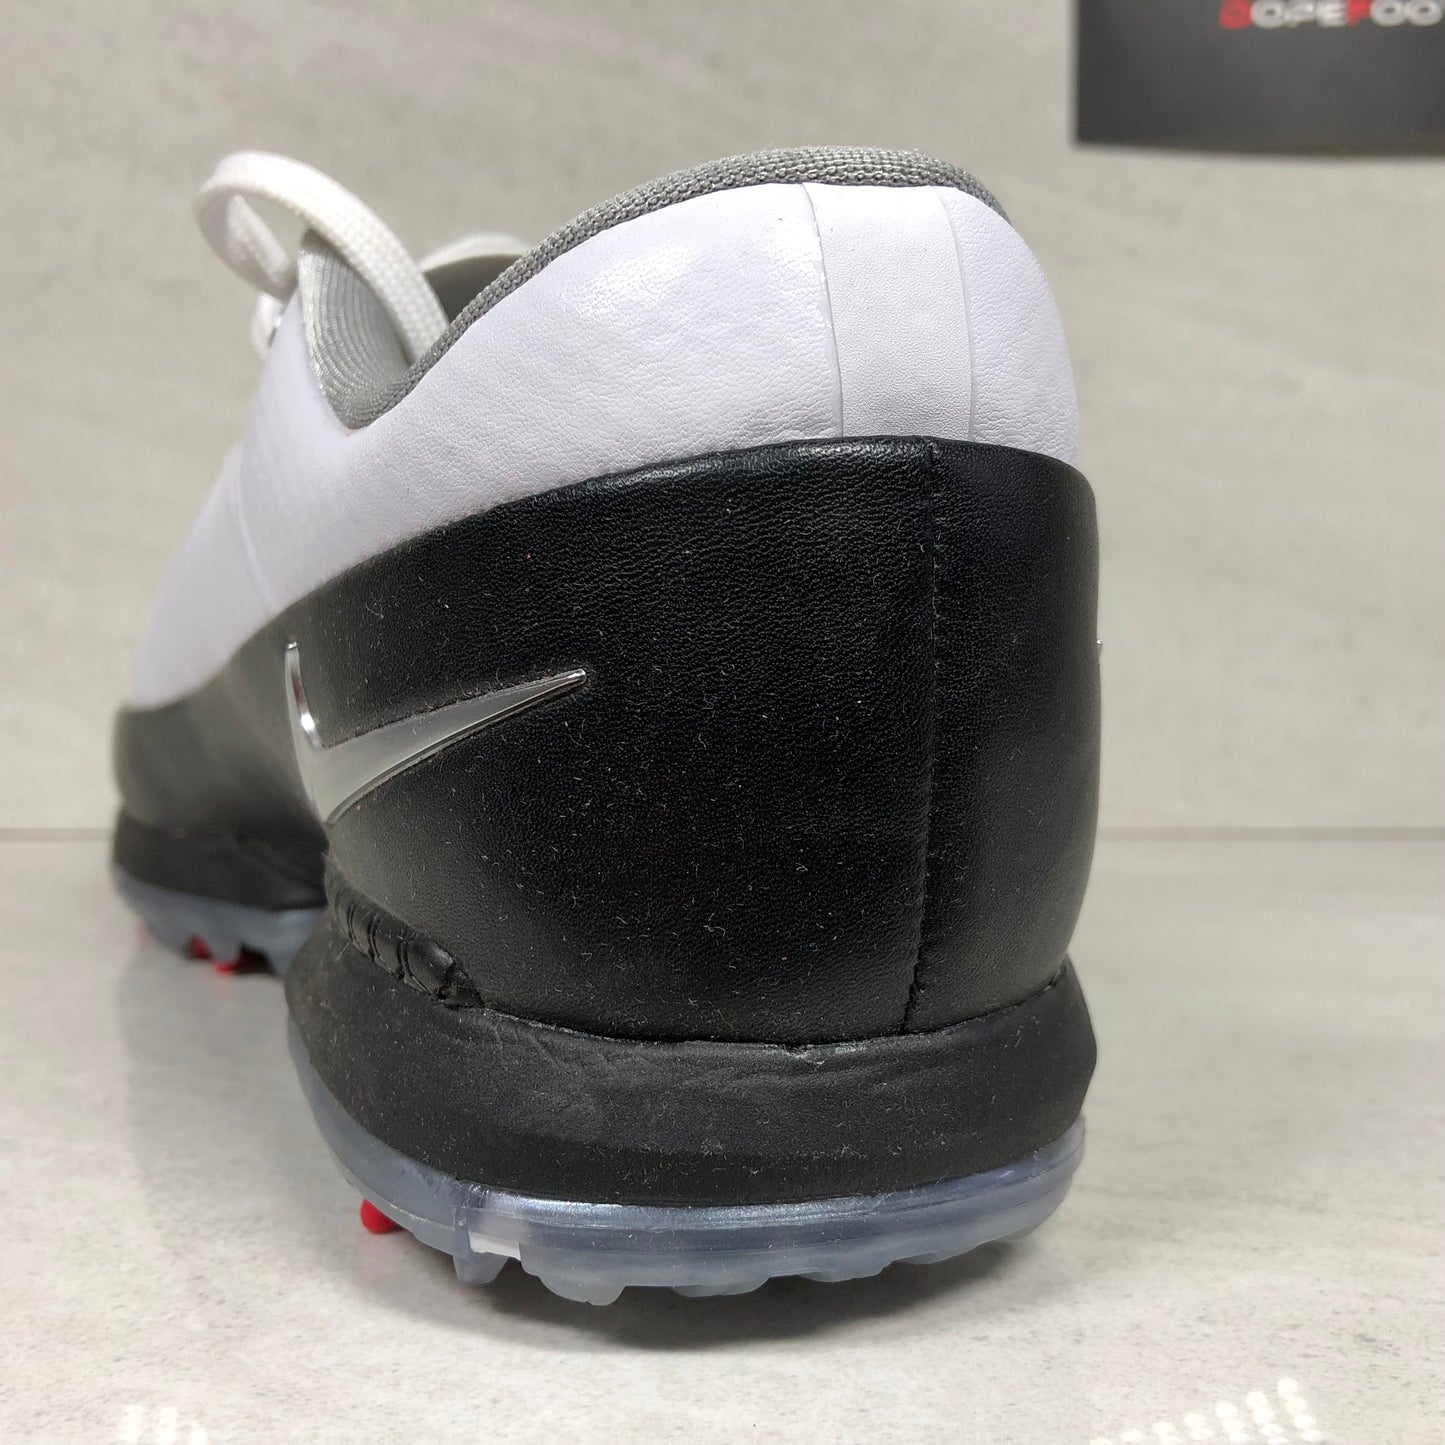 DS Nike Air Zoom Attack Golf Zapatos Tamaño 9 Blanco/Negro 853739 101